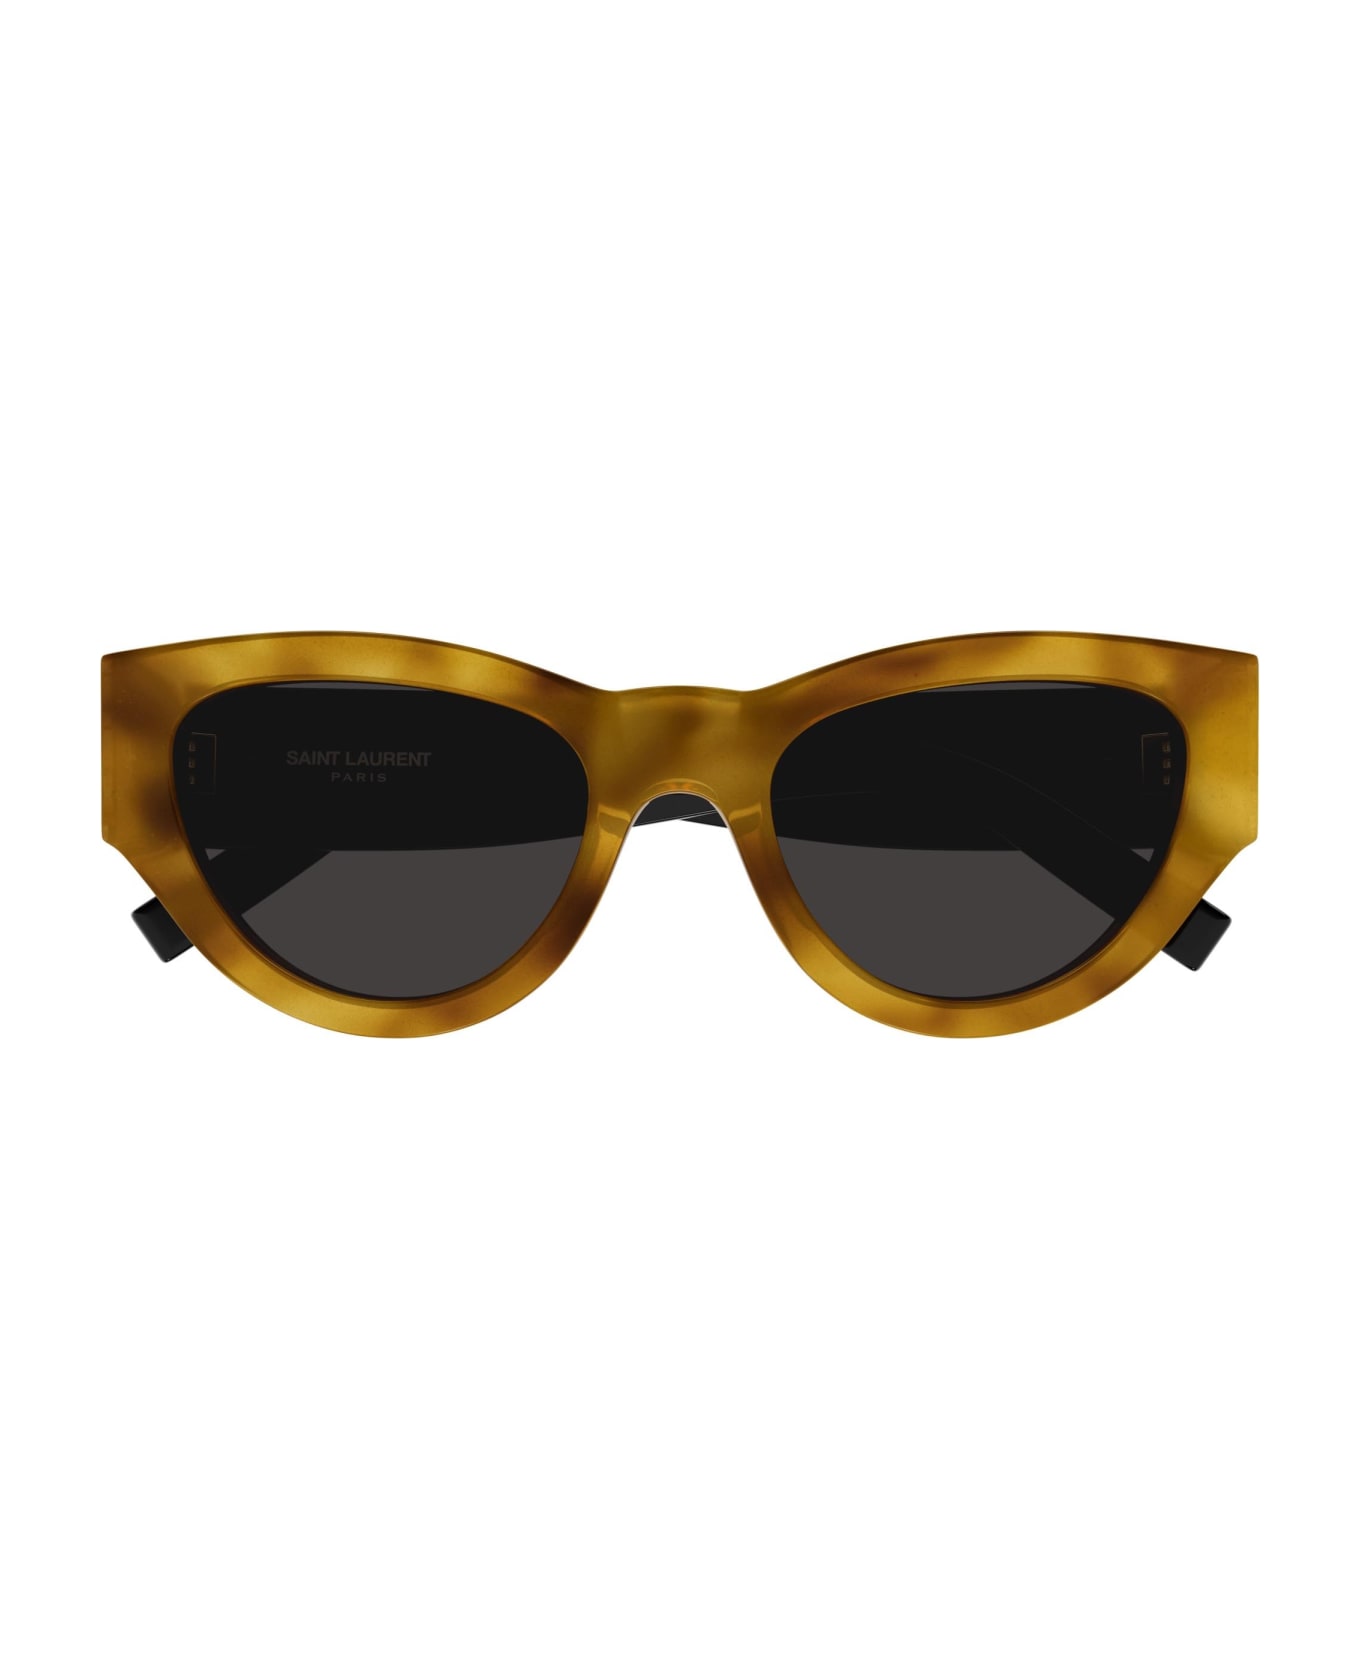 Saint Laurent Eyewear Sunglasses - Havana/Nero サングラス